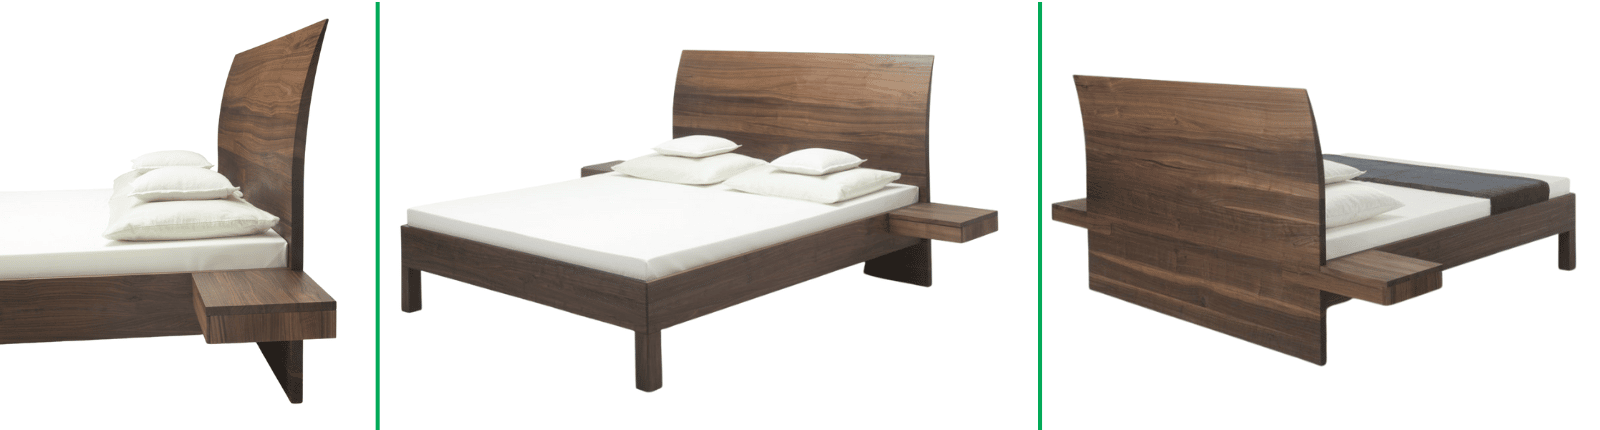 Luxlet Italian custom bed frames